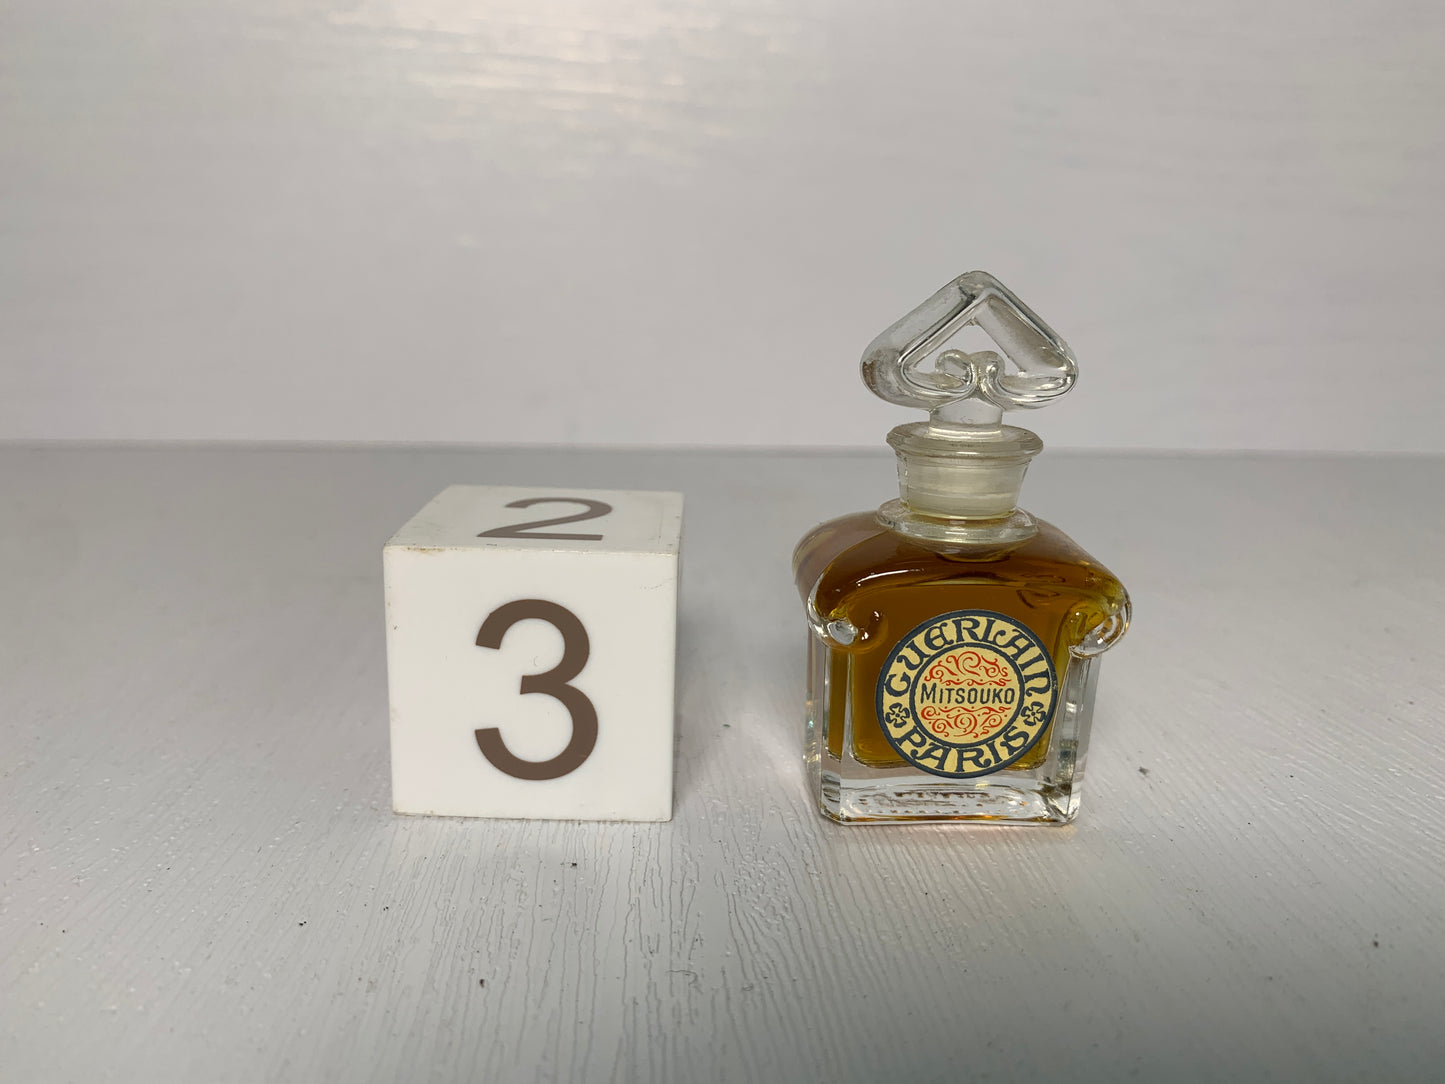 Guerlain Mitsouko 7.5ml 1/4 oz parfum perfume - 22NOV